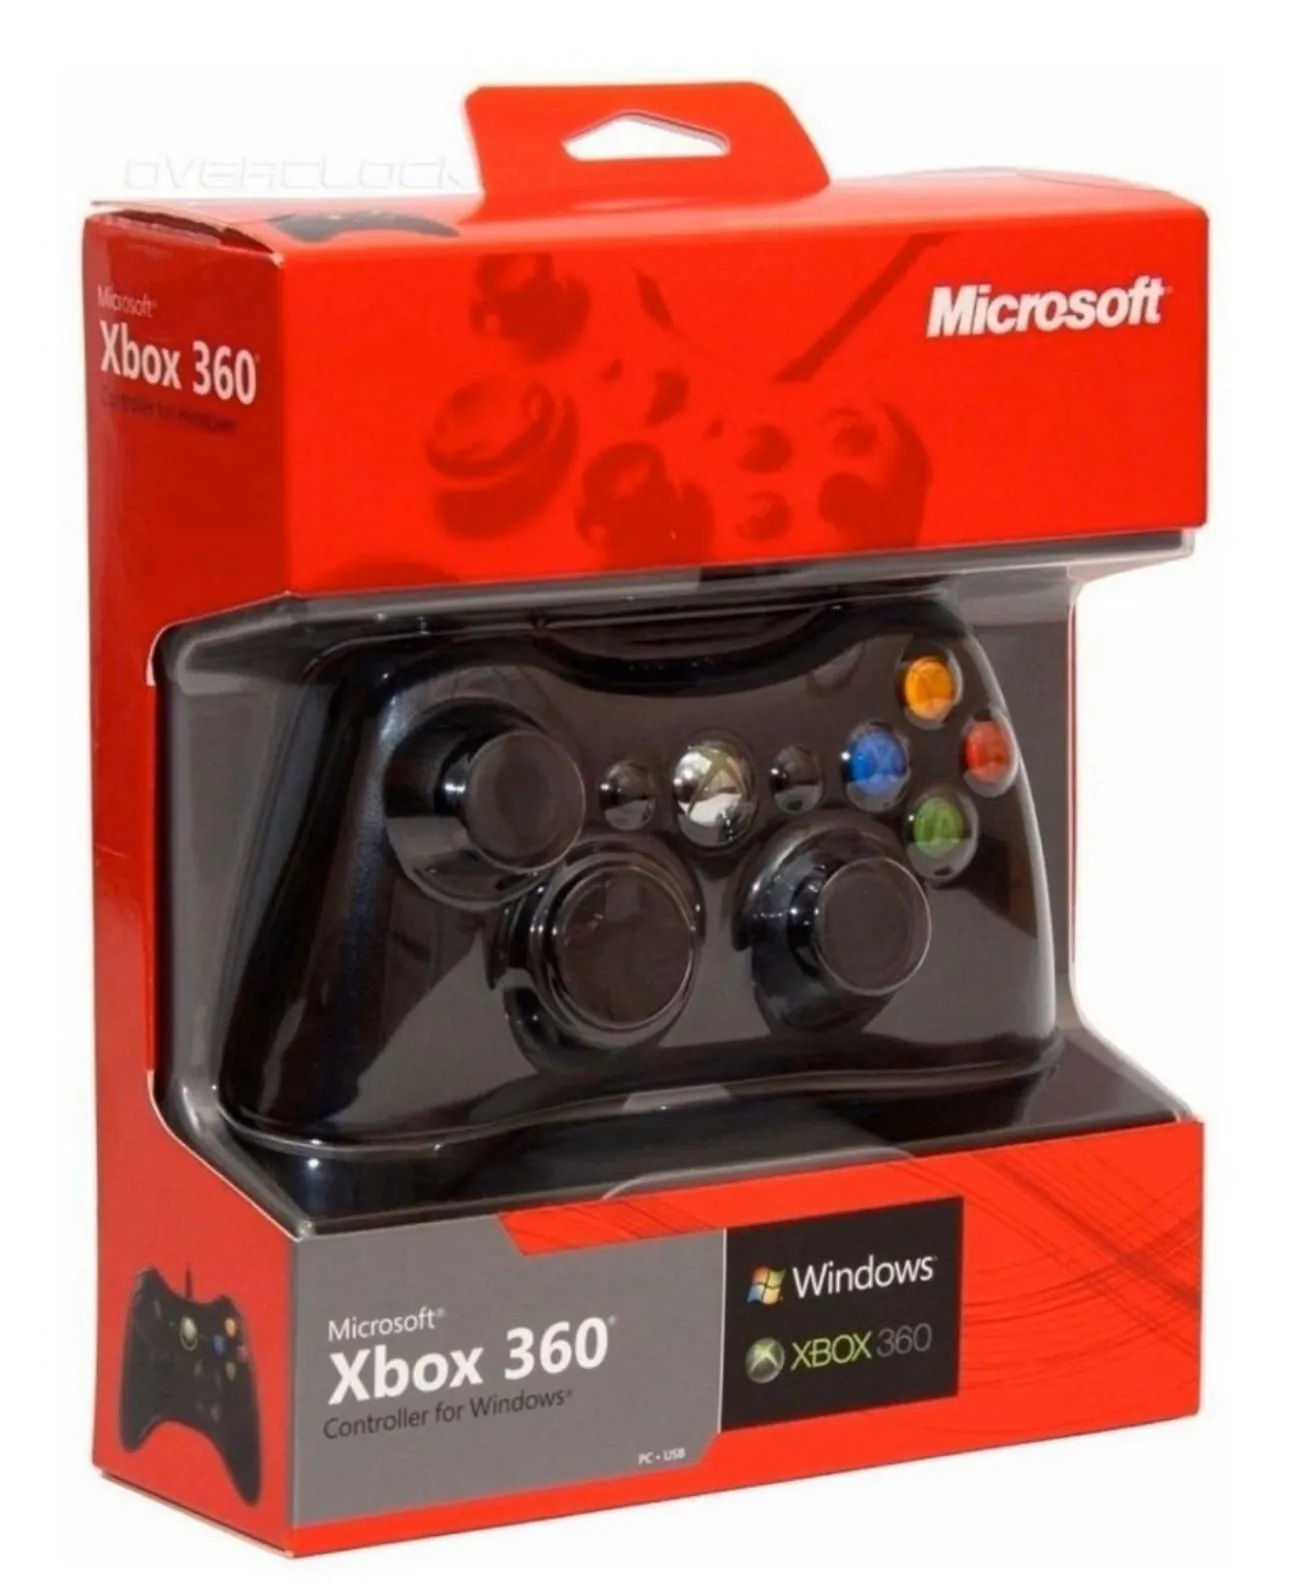 Xbox 360 Slim 5.0 + 1 Controles C+Disco Duro 500GB +300 Juegos